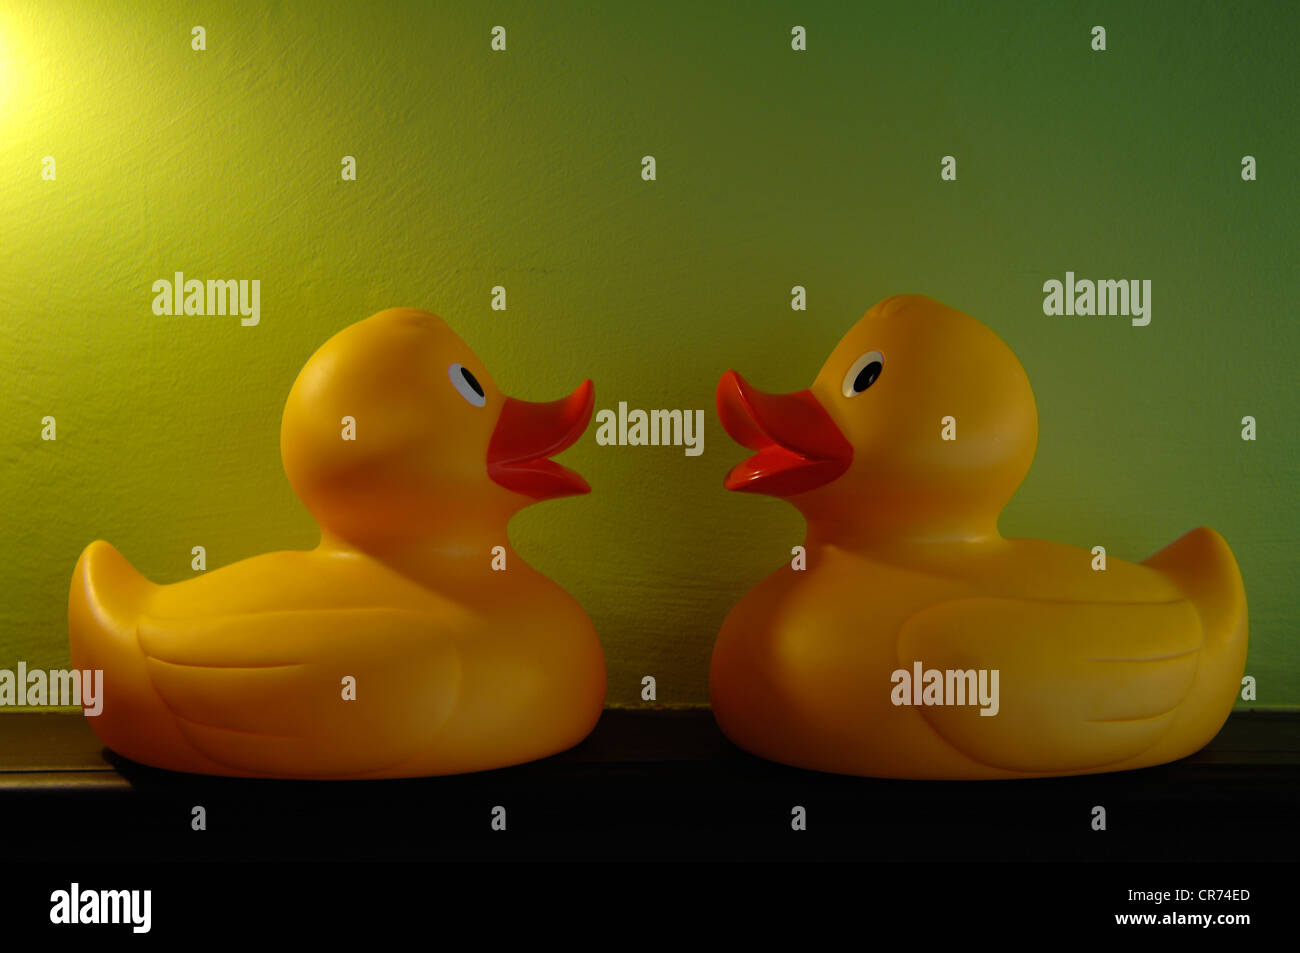 Two rubber ducks, bathroom decorations Stock Photo